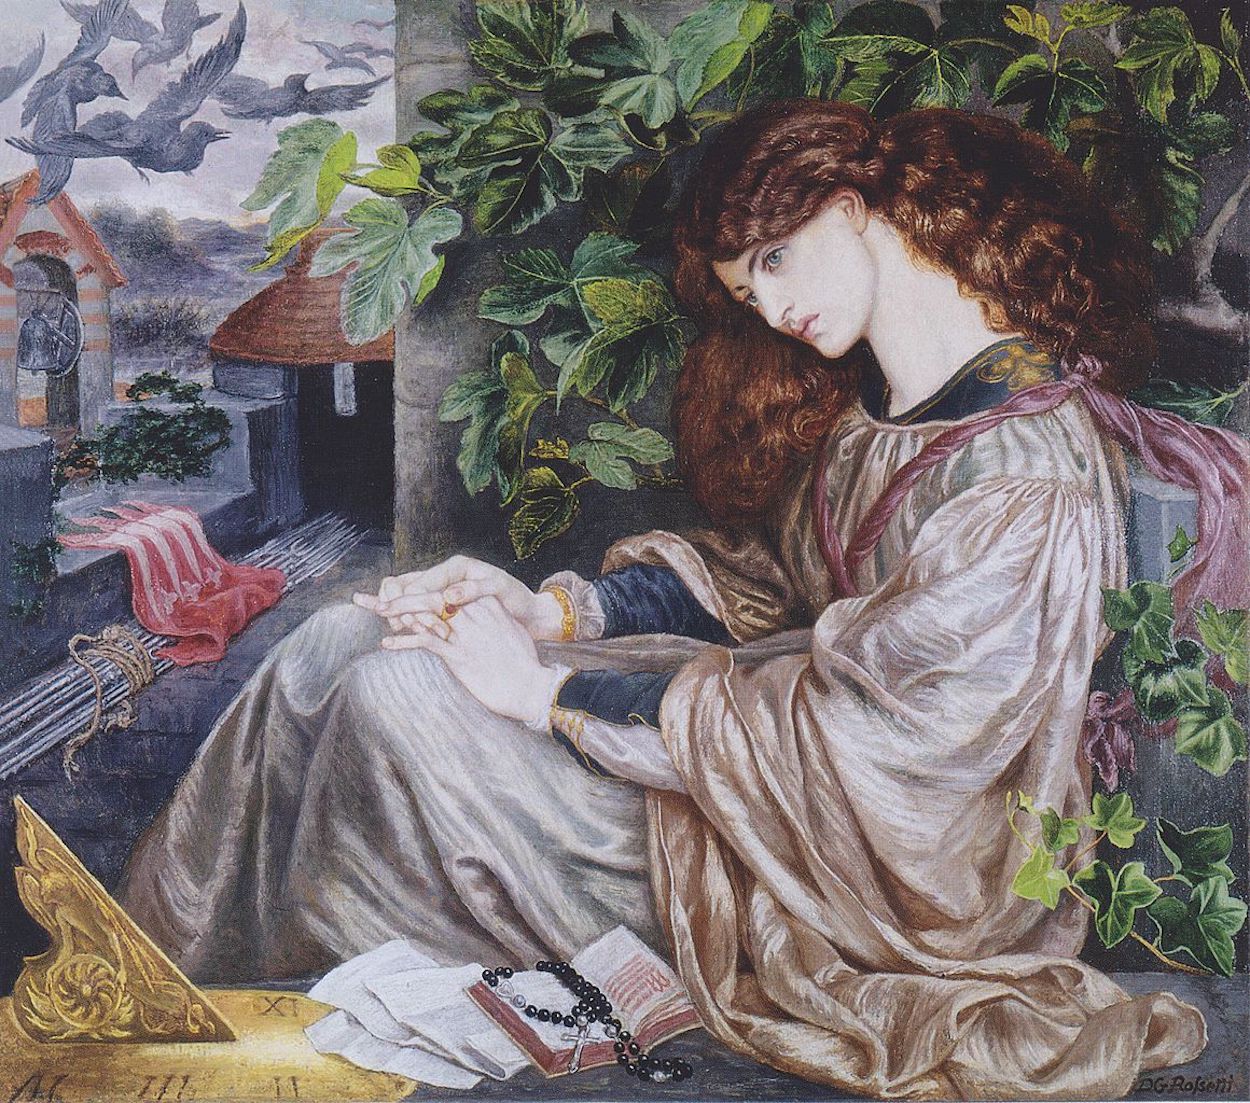 Pia de' Tolomei by Dante Gabriel Rossetti - 1868-1880 - 104.8 x 120.6 cm Museo de Arte Spencer